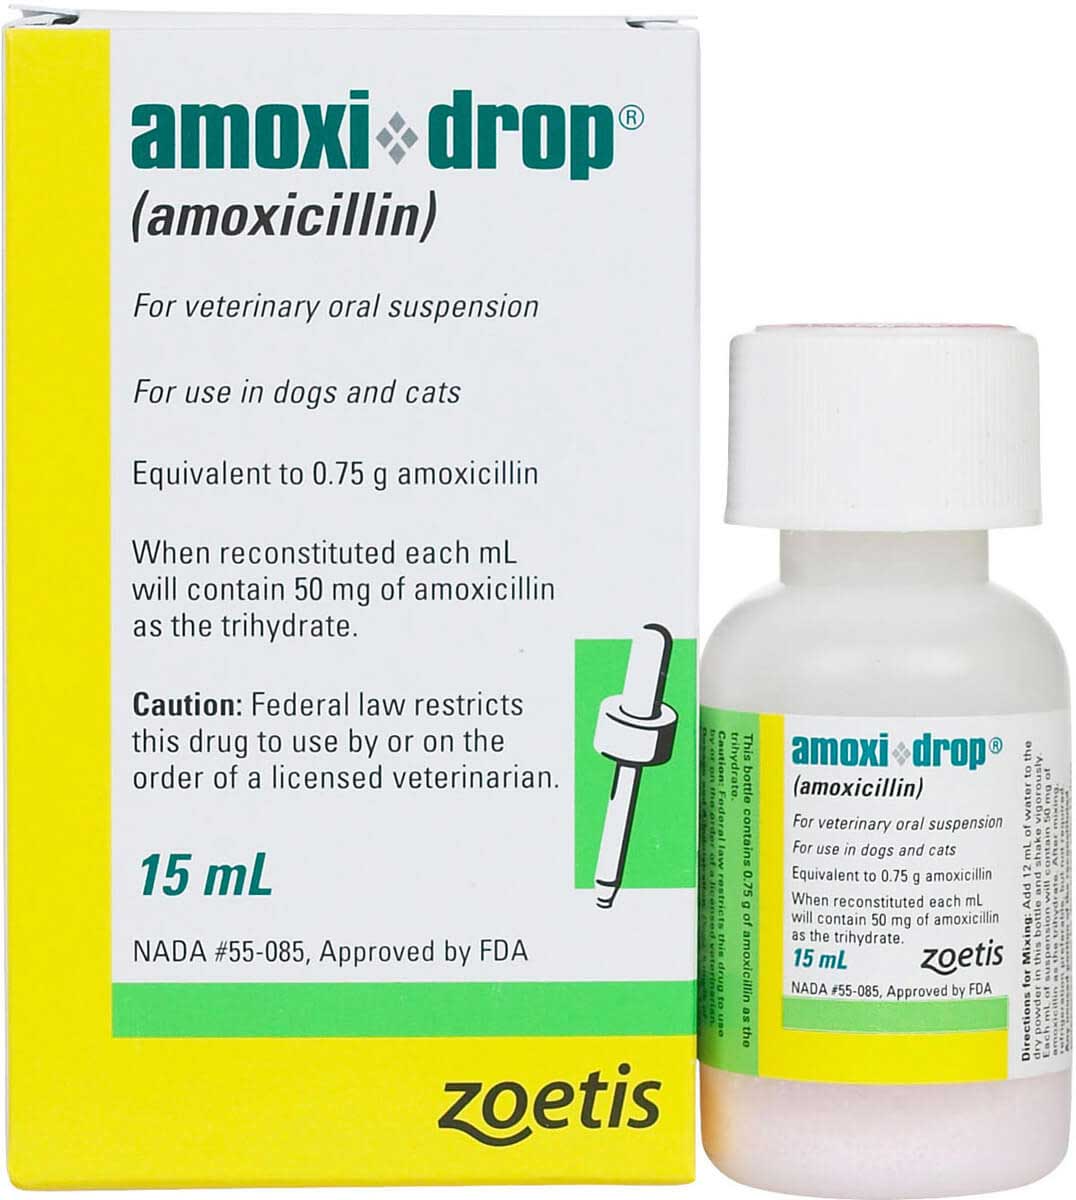 AmoxiDrop for Dogs Cats Zoetis Animal Health Safe.Pharmacy